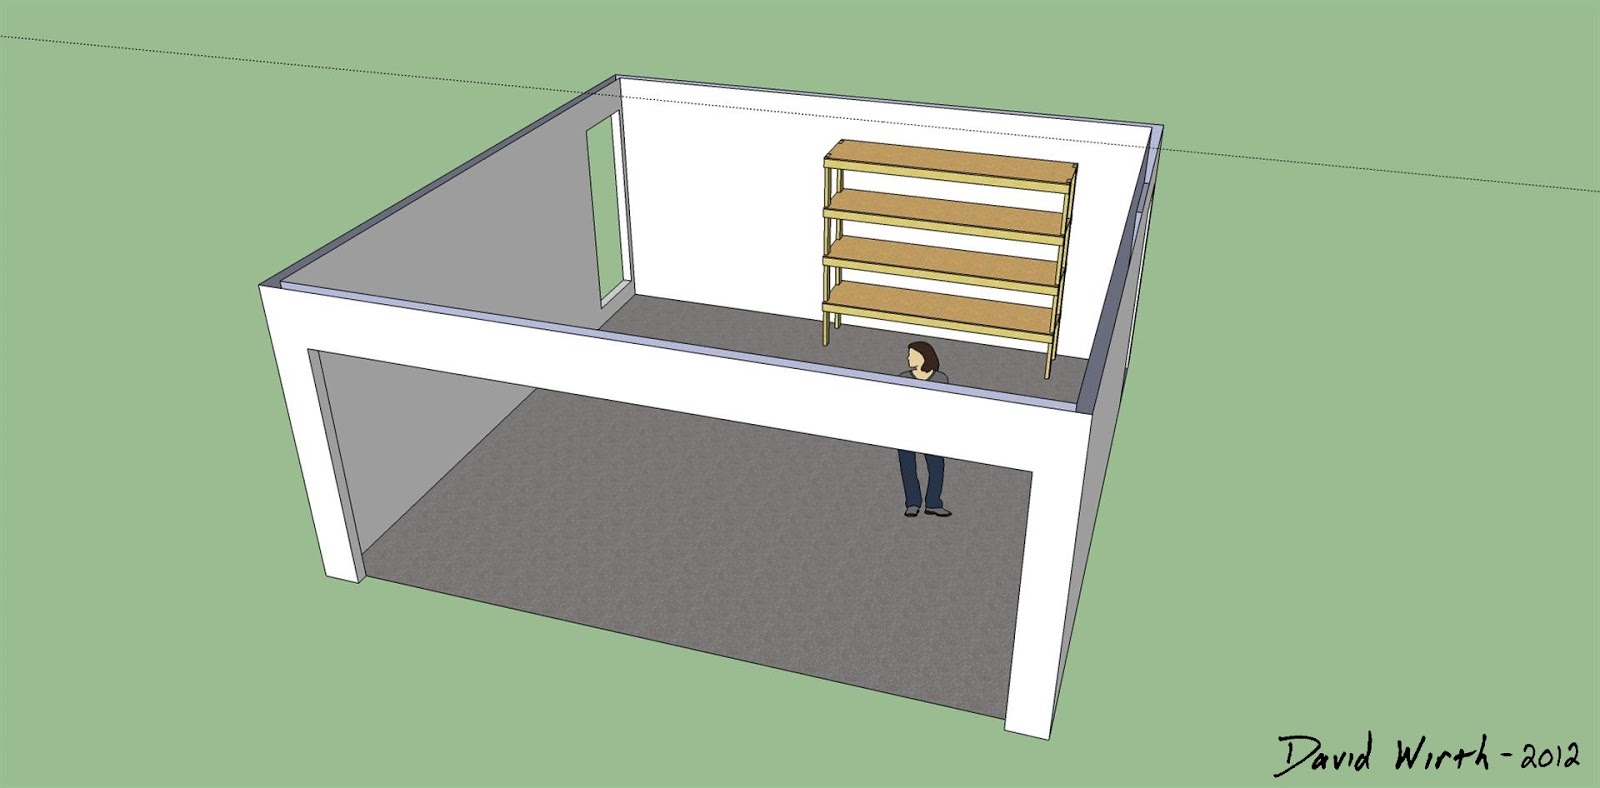 How to Build a Shelf for the Garage